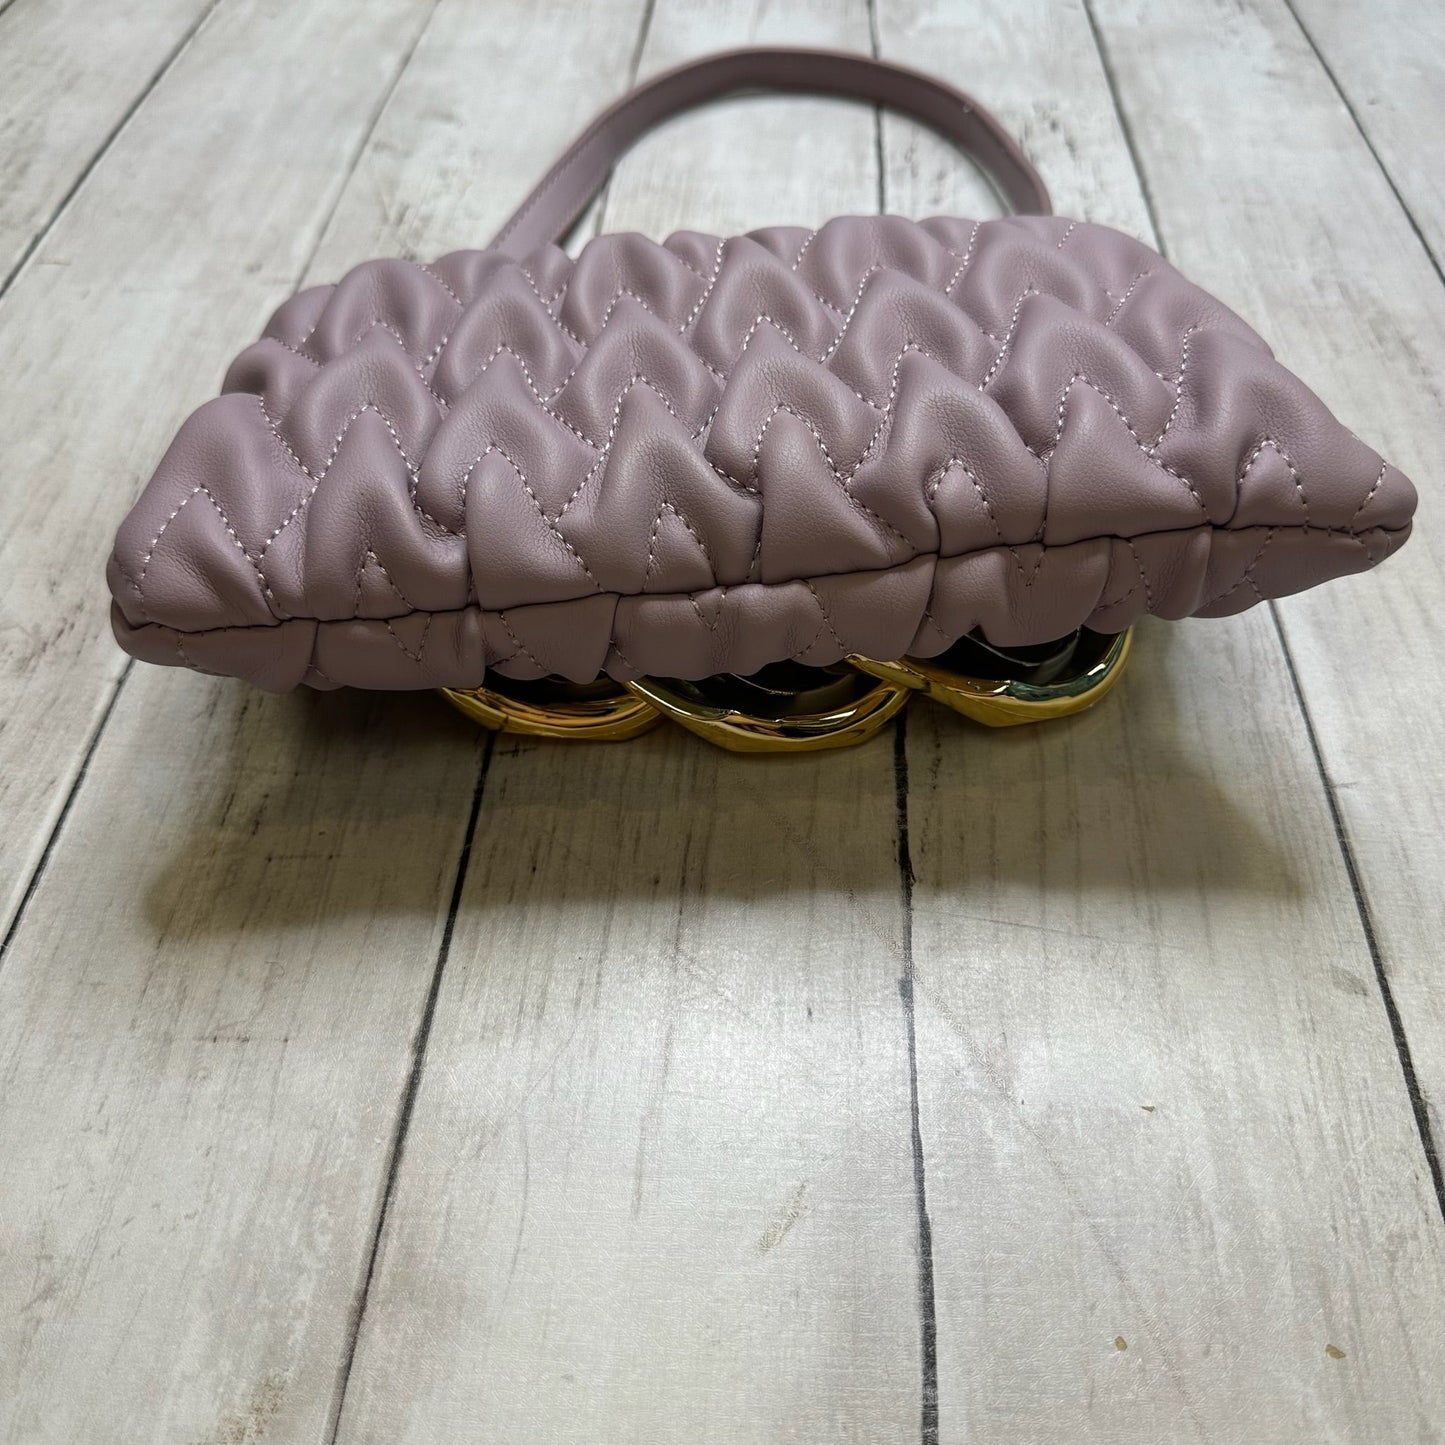 Handbag By Clothes Mentor  Size: Small